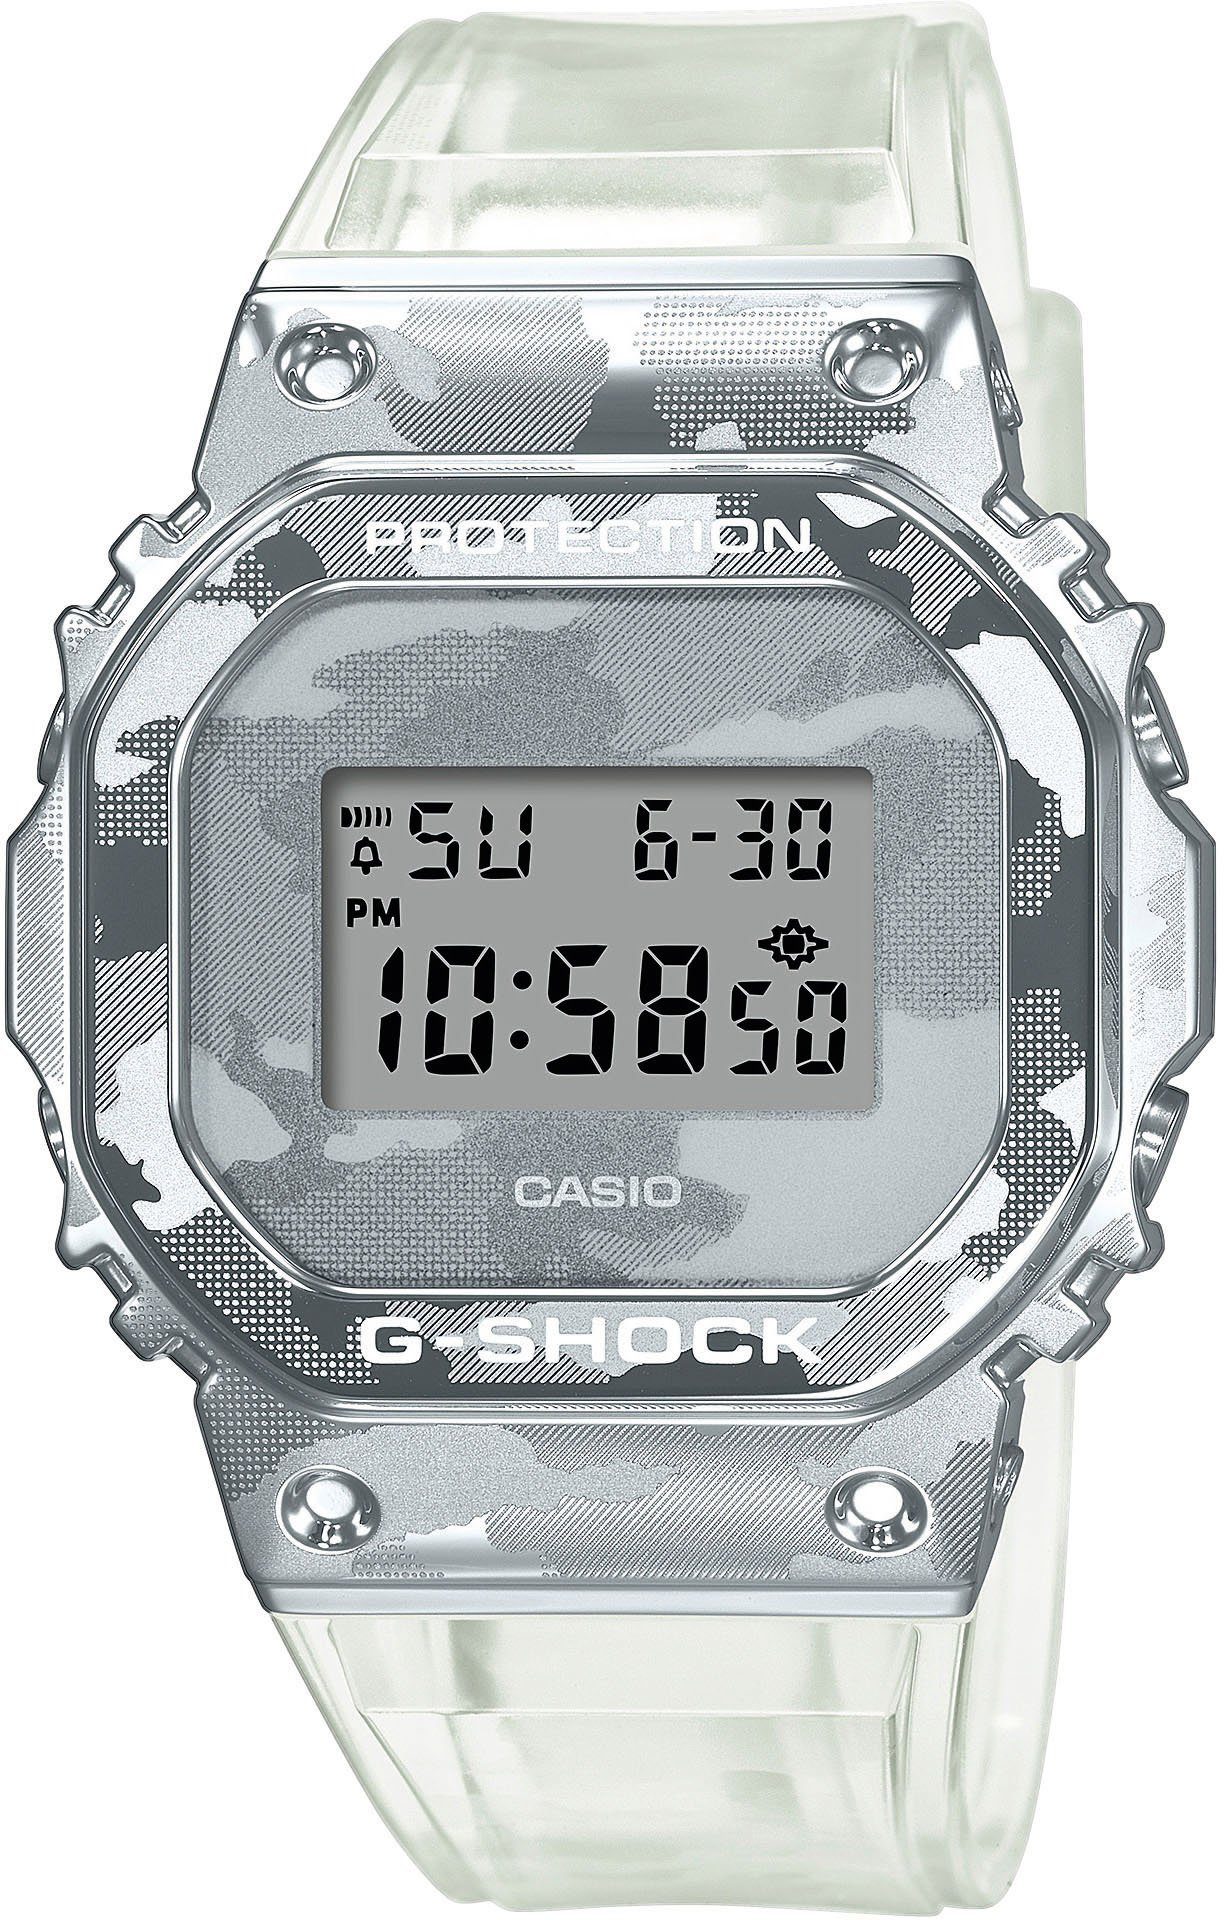 CASIO G-SHOCK GM-5600SCM-1ER Chronograph